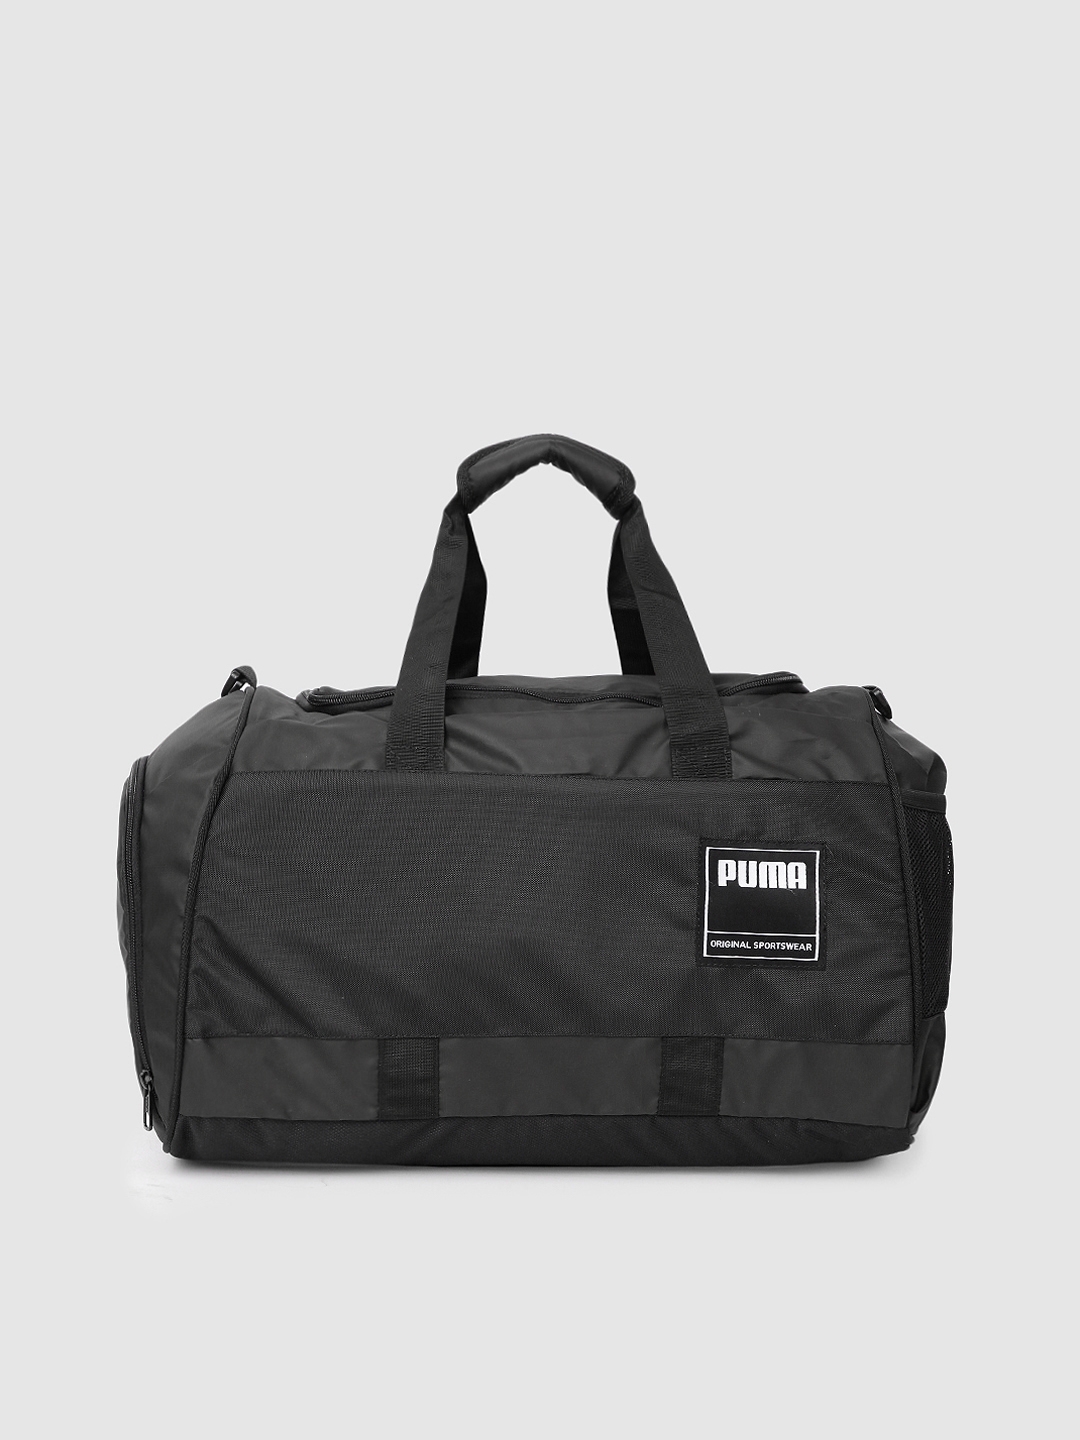 Puma Unisex Black Gym Duffle Bag